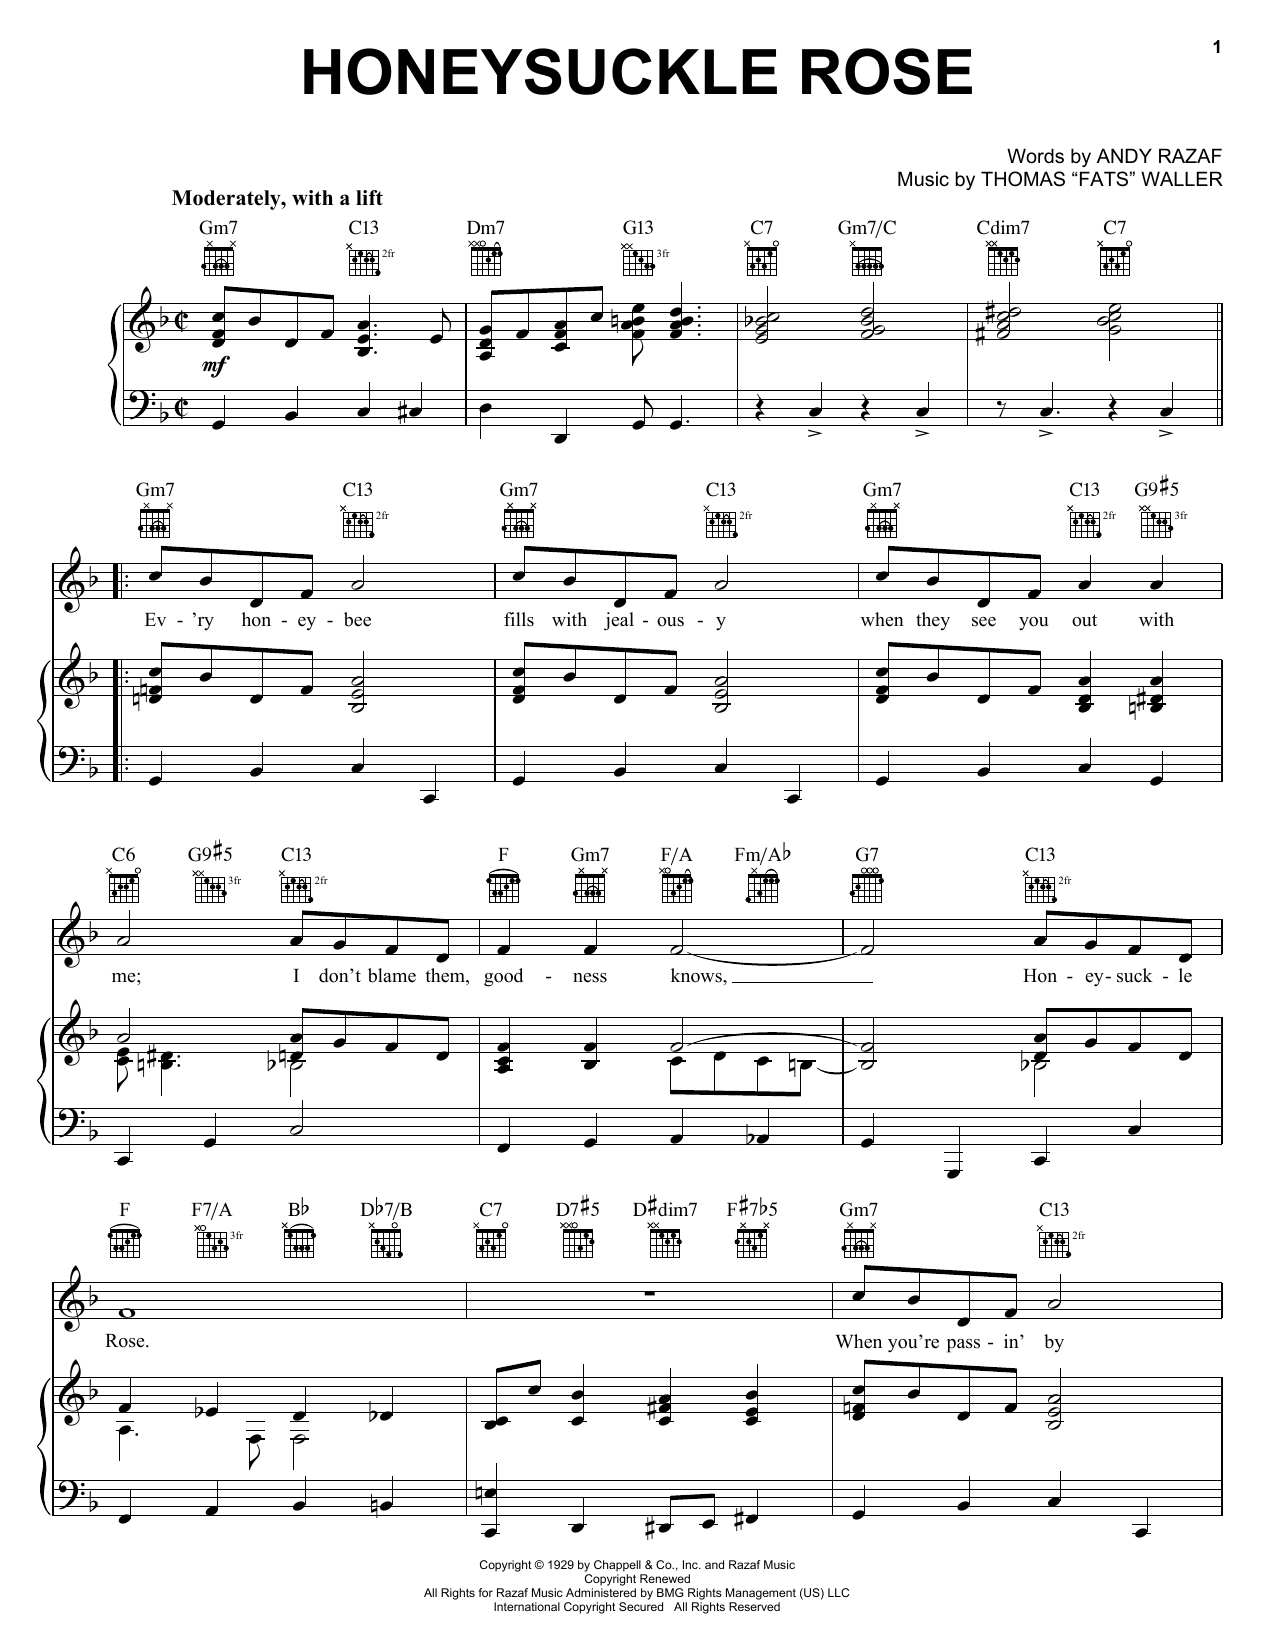 Django Reinhardt Honeysuckle Rose Sheet Music Notes & Chords for Melody Line, Lyrics & Chords - Download or Print PDF